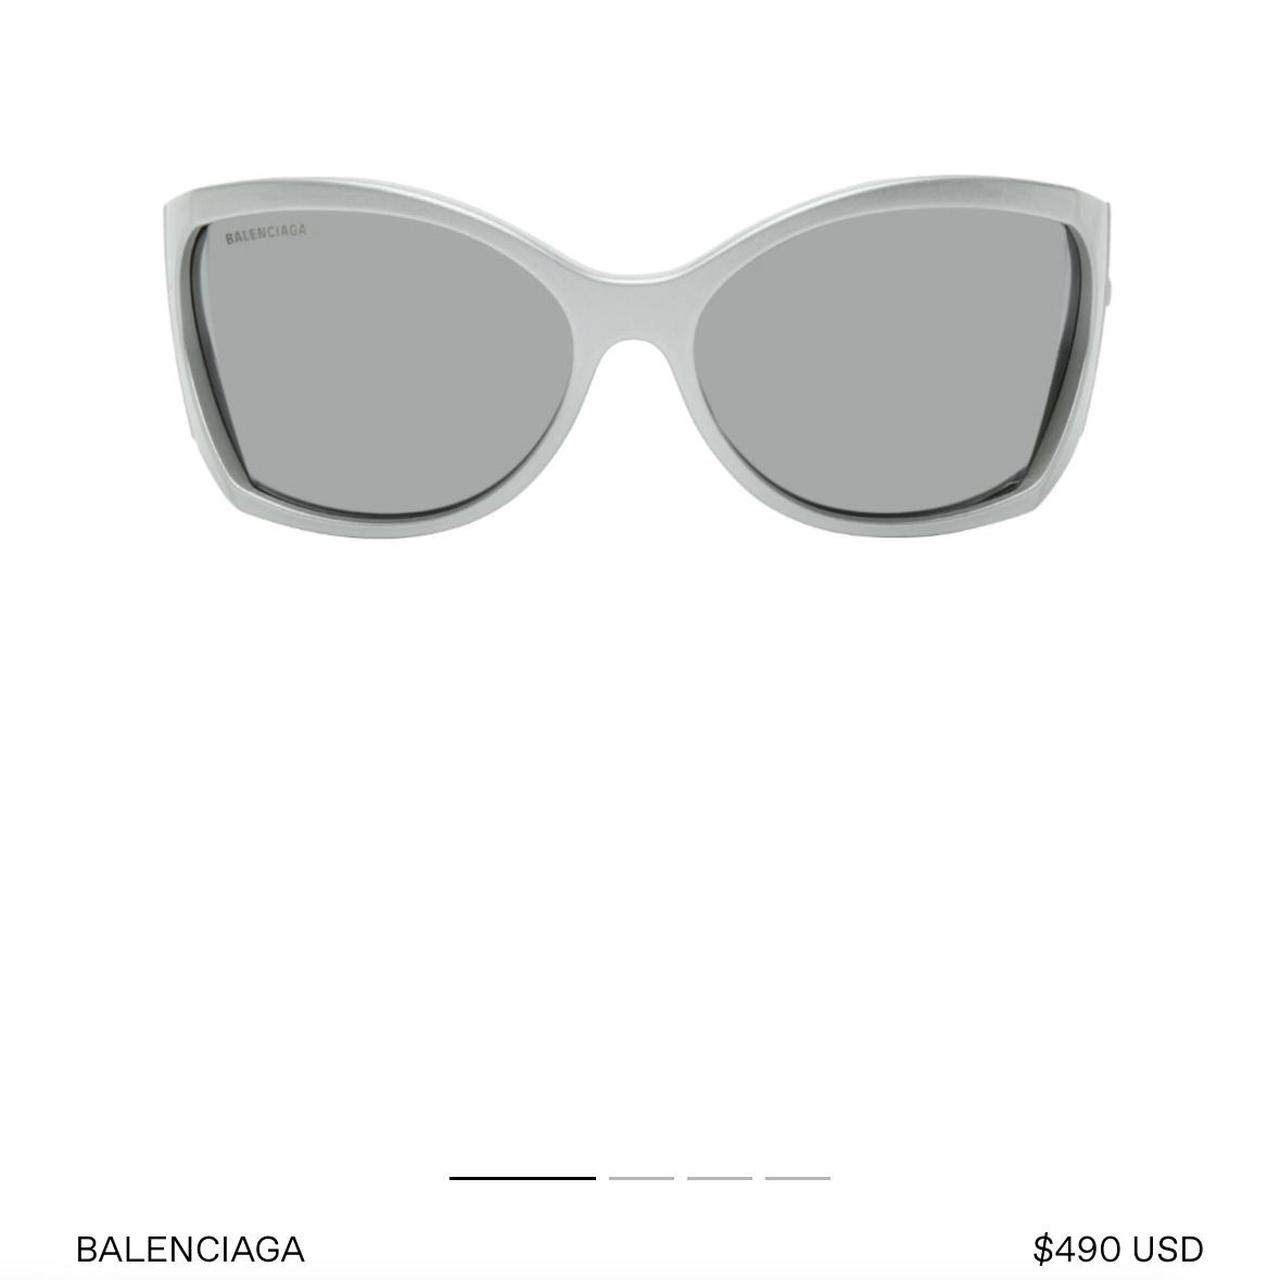 Balenciaga Women's Silver Sunglasses (2)